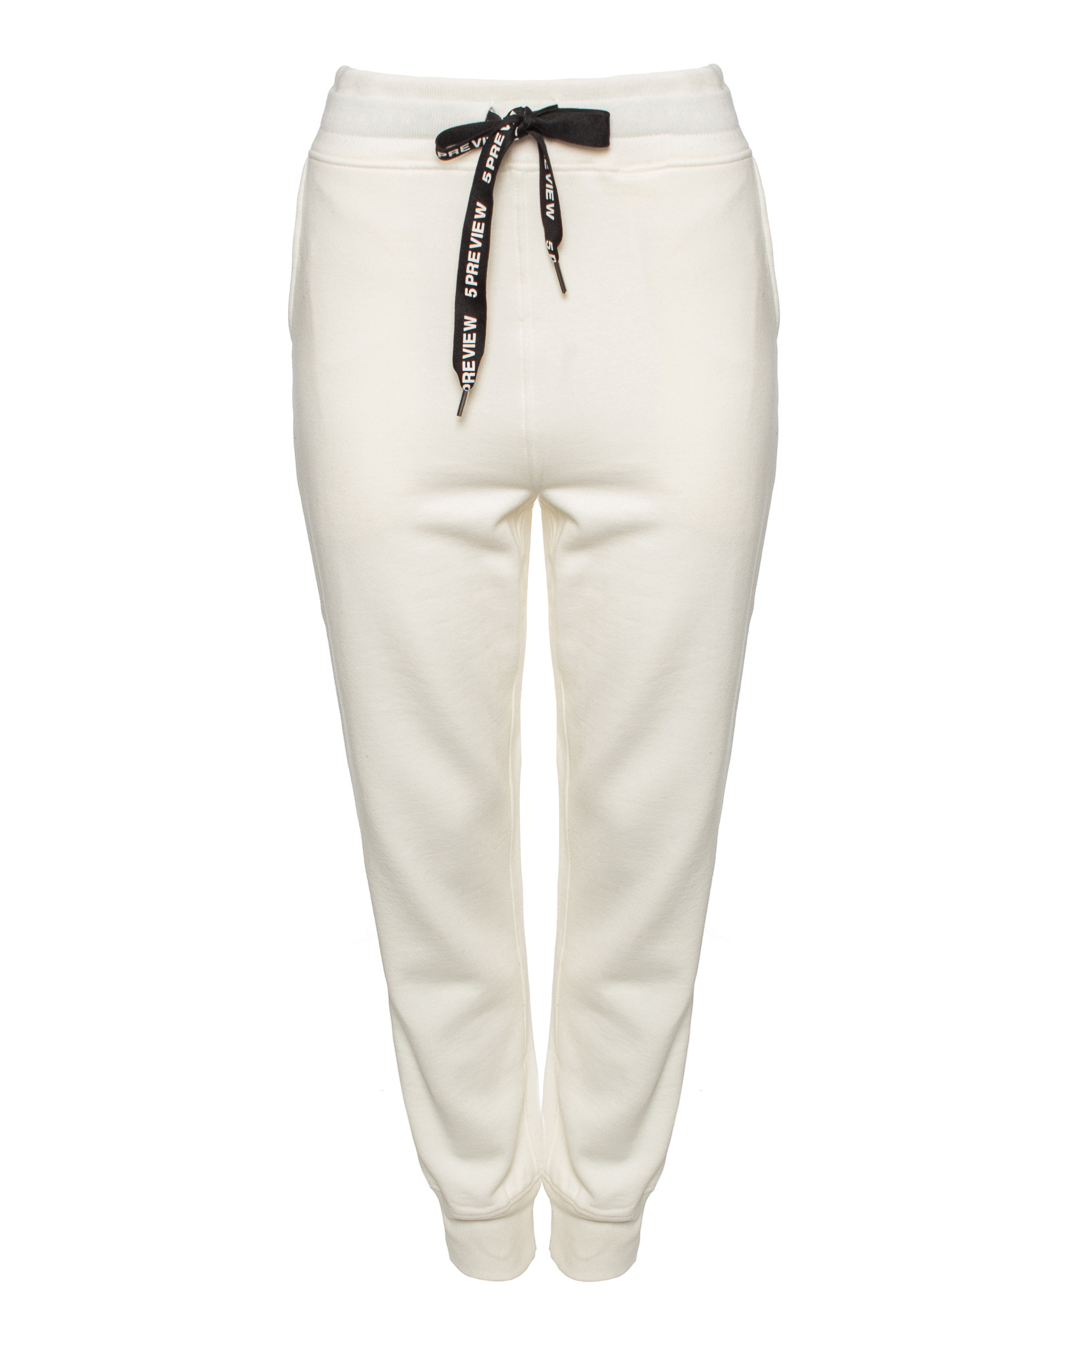 фото Спортивные брюки женские 5preview salma.w21016.22 белые xs